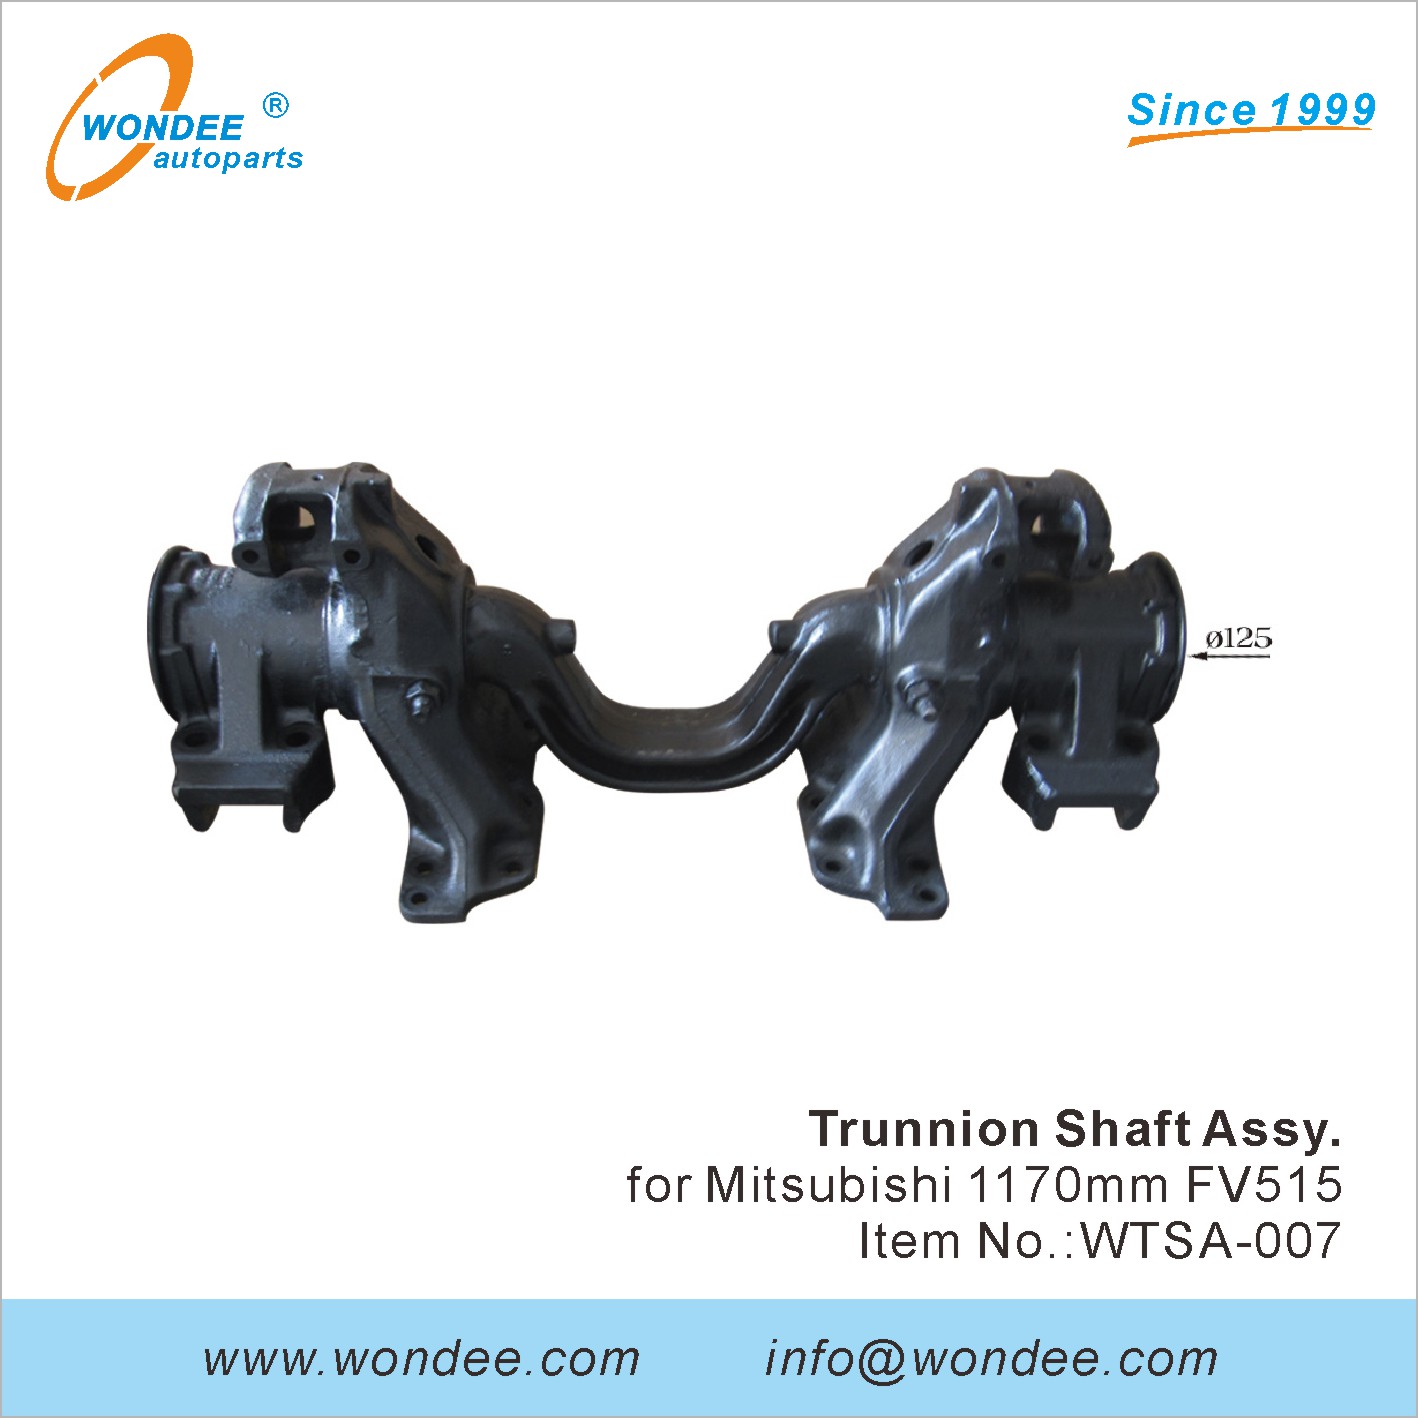 WONDEE trunnion shaft assembly (7)